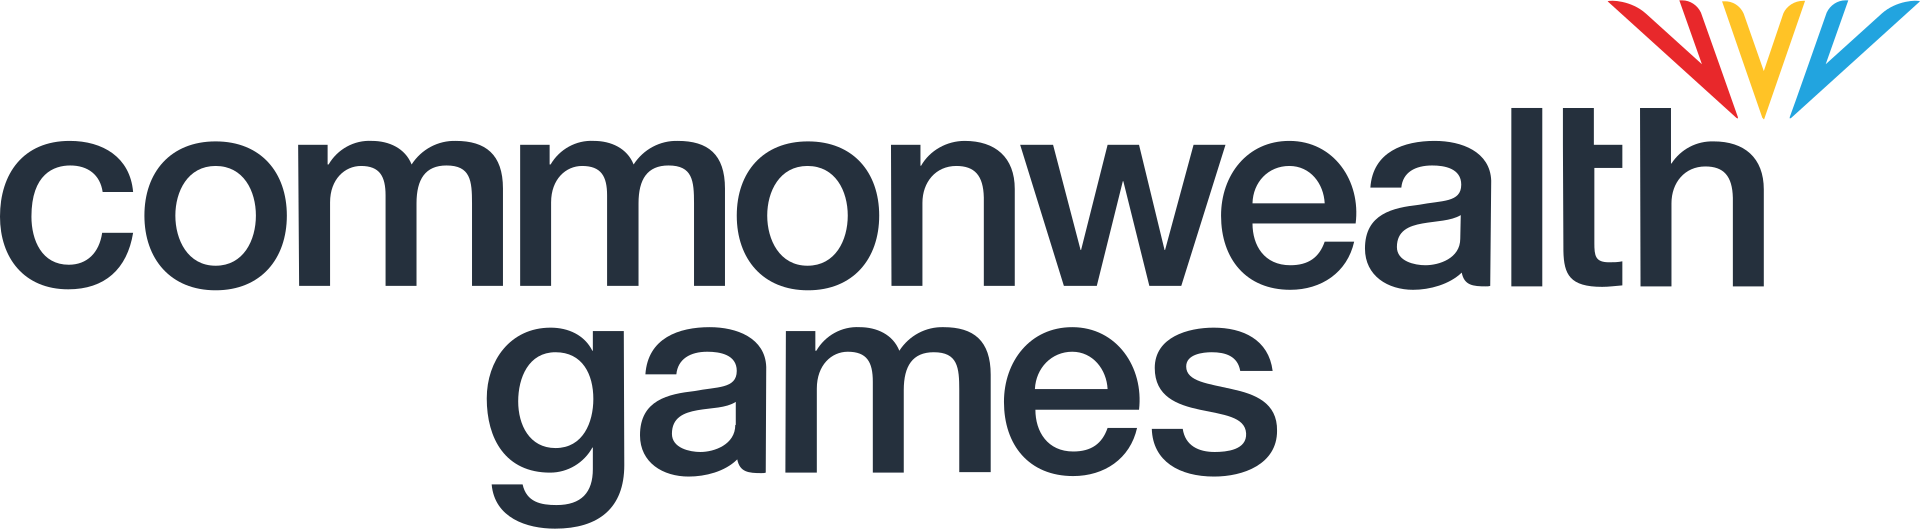 2022 Commonwealth Games - Wikipedia